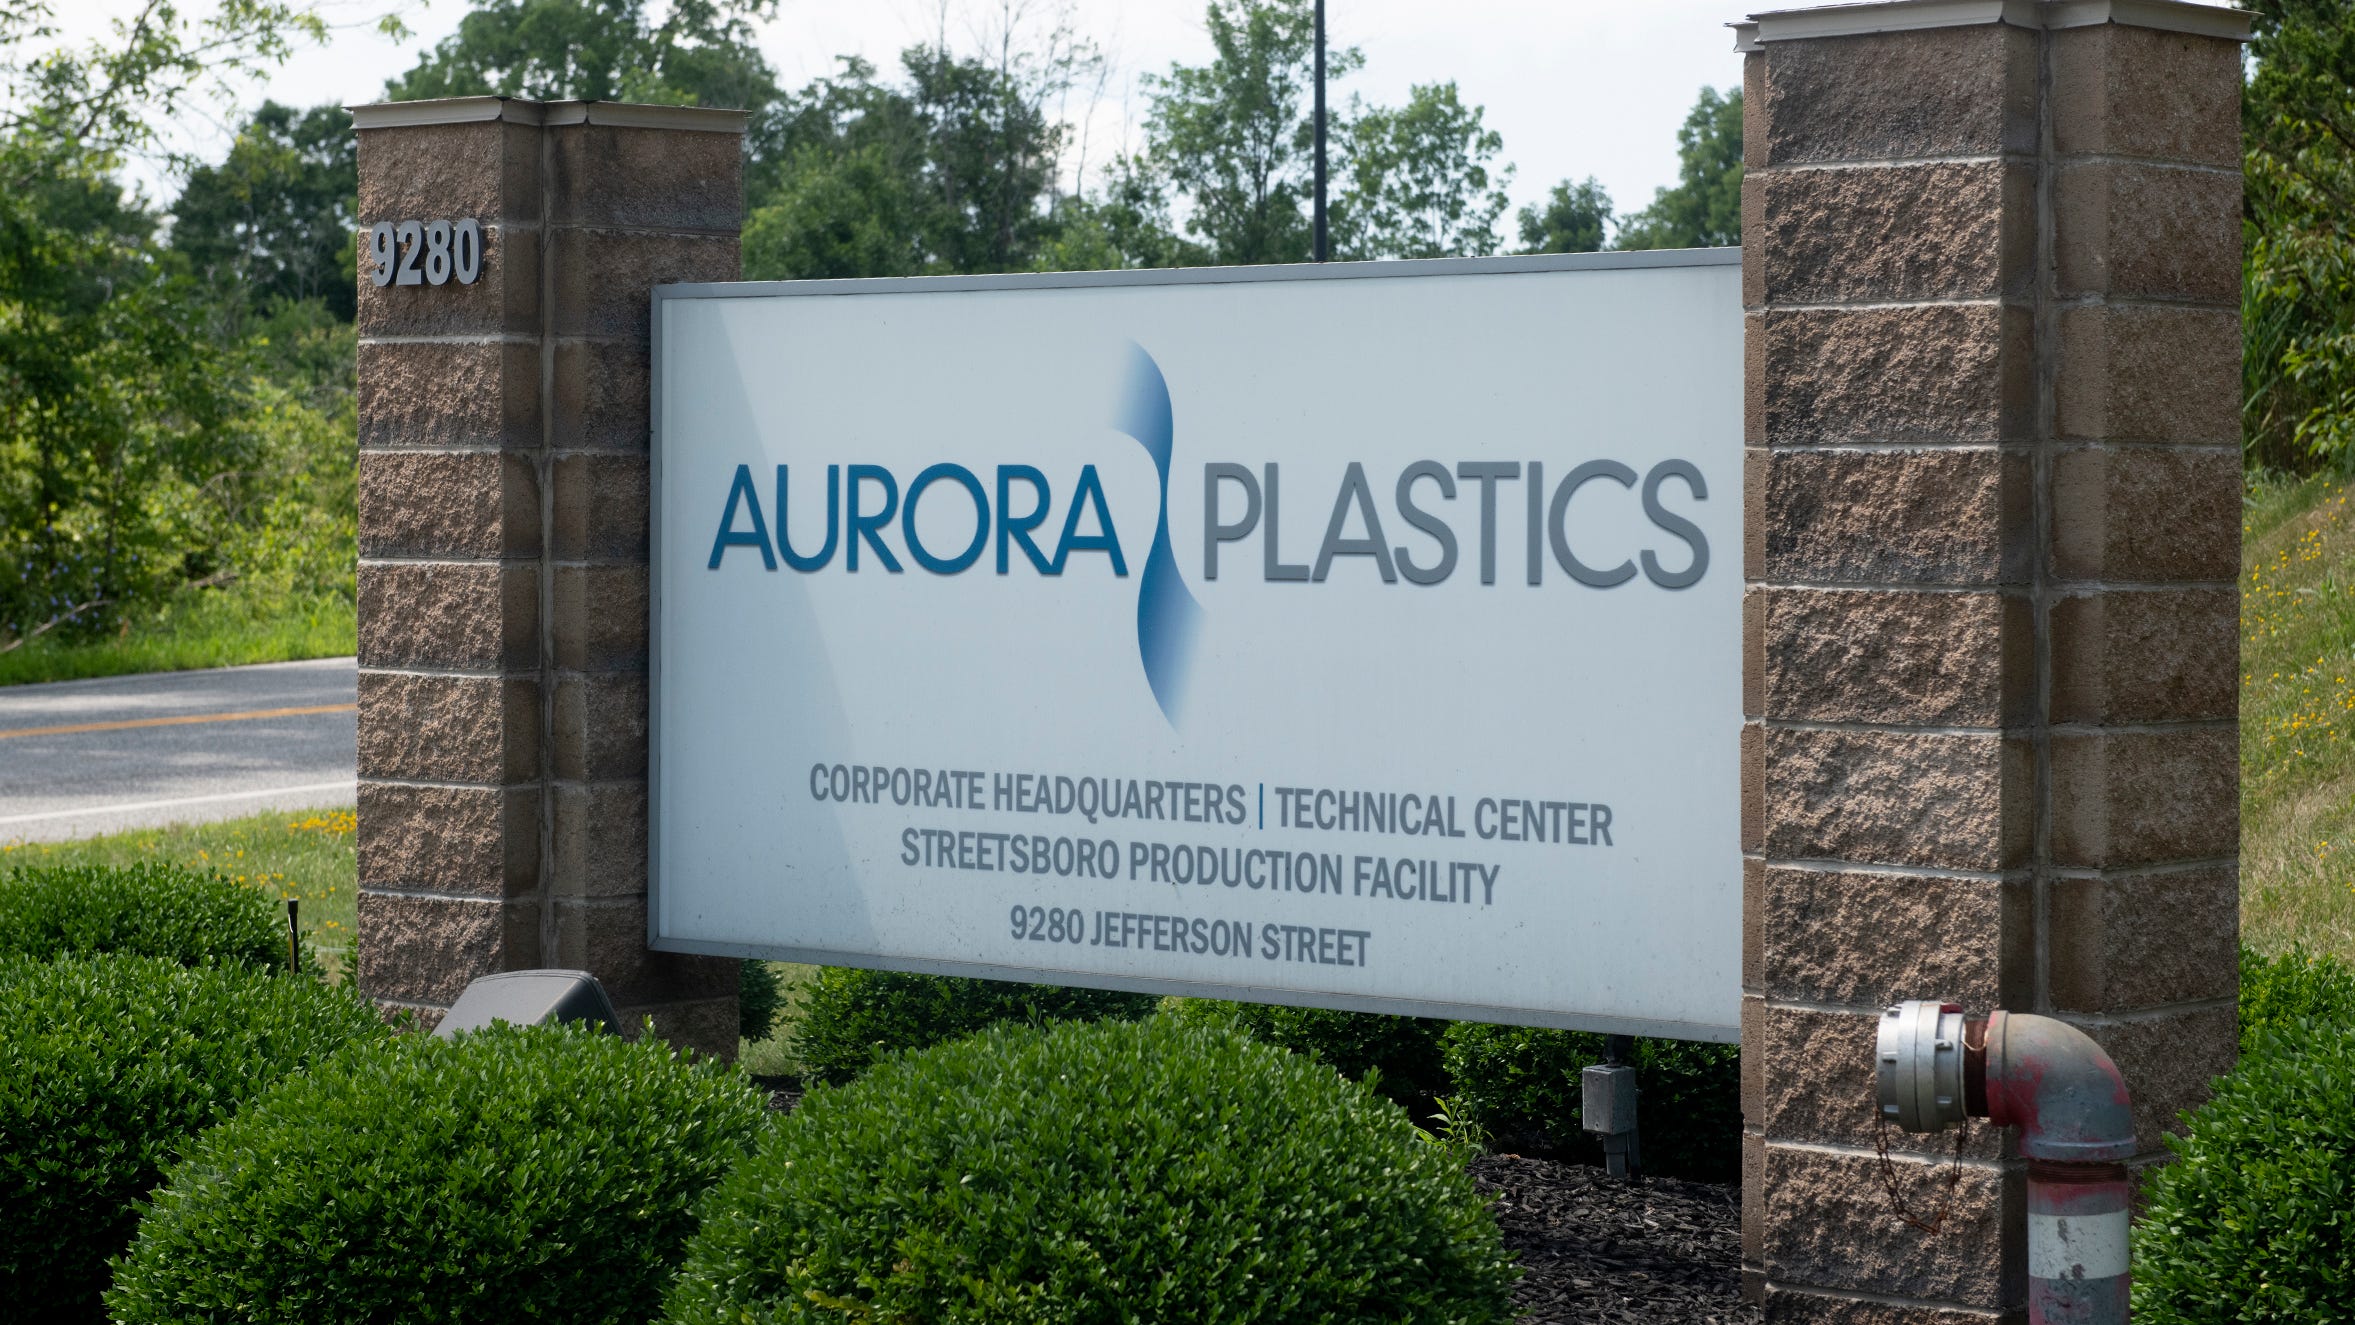  Aurora Plastics in Streetsboro gets tax abatement for expansion, will create new jobs 